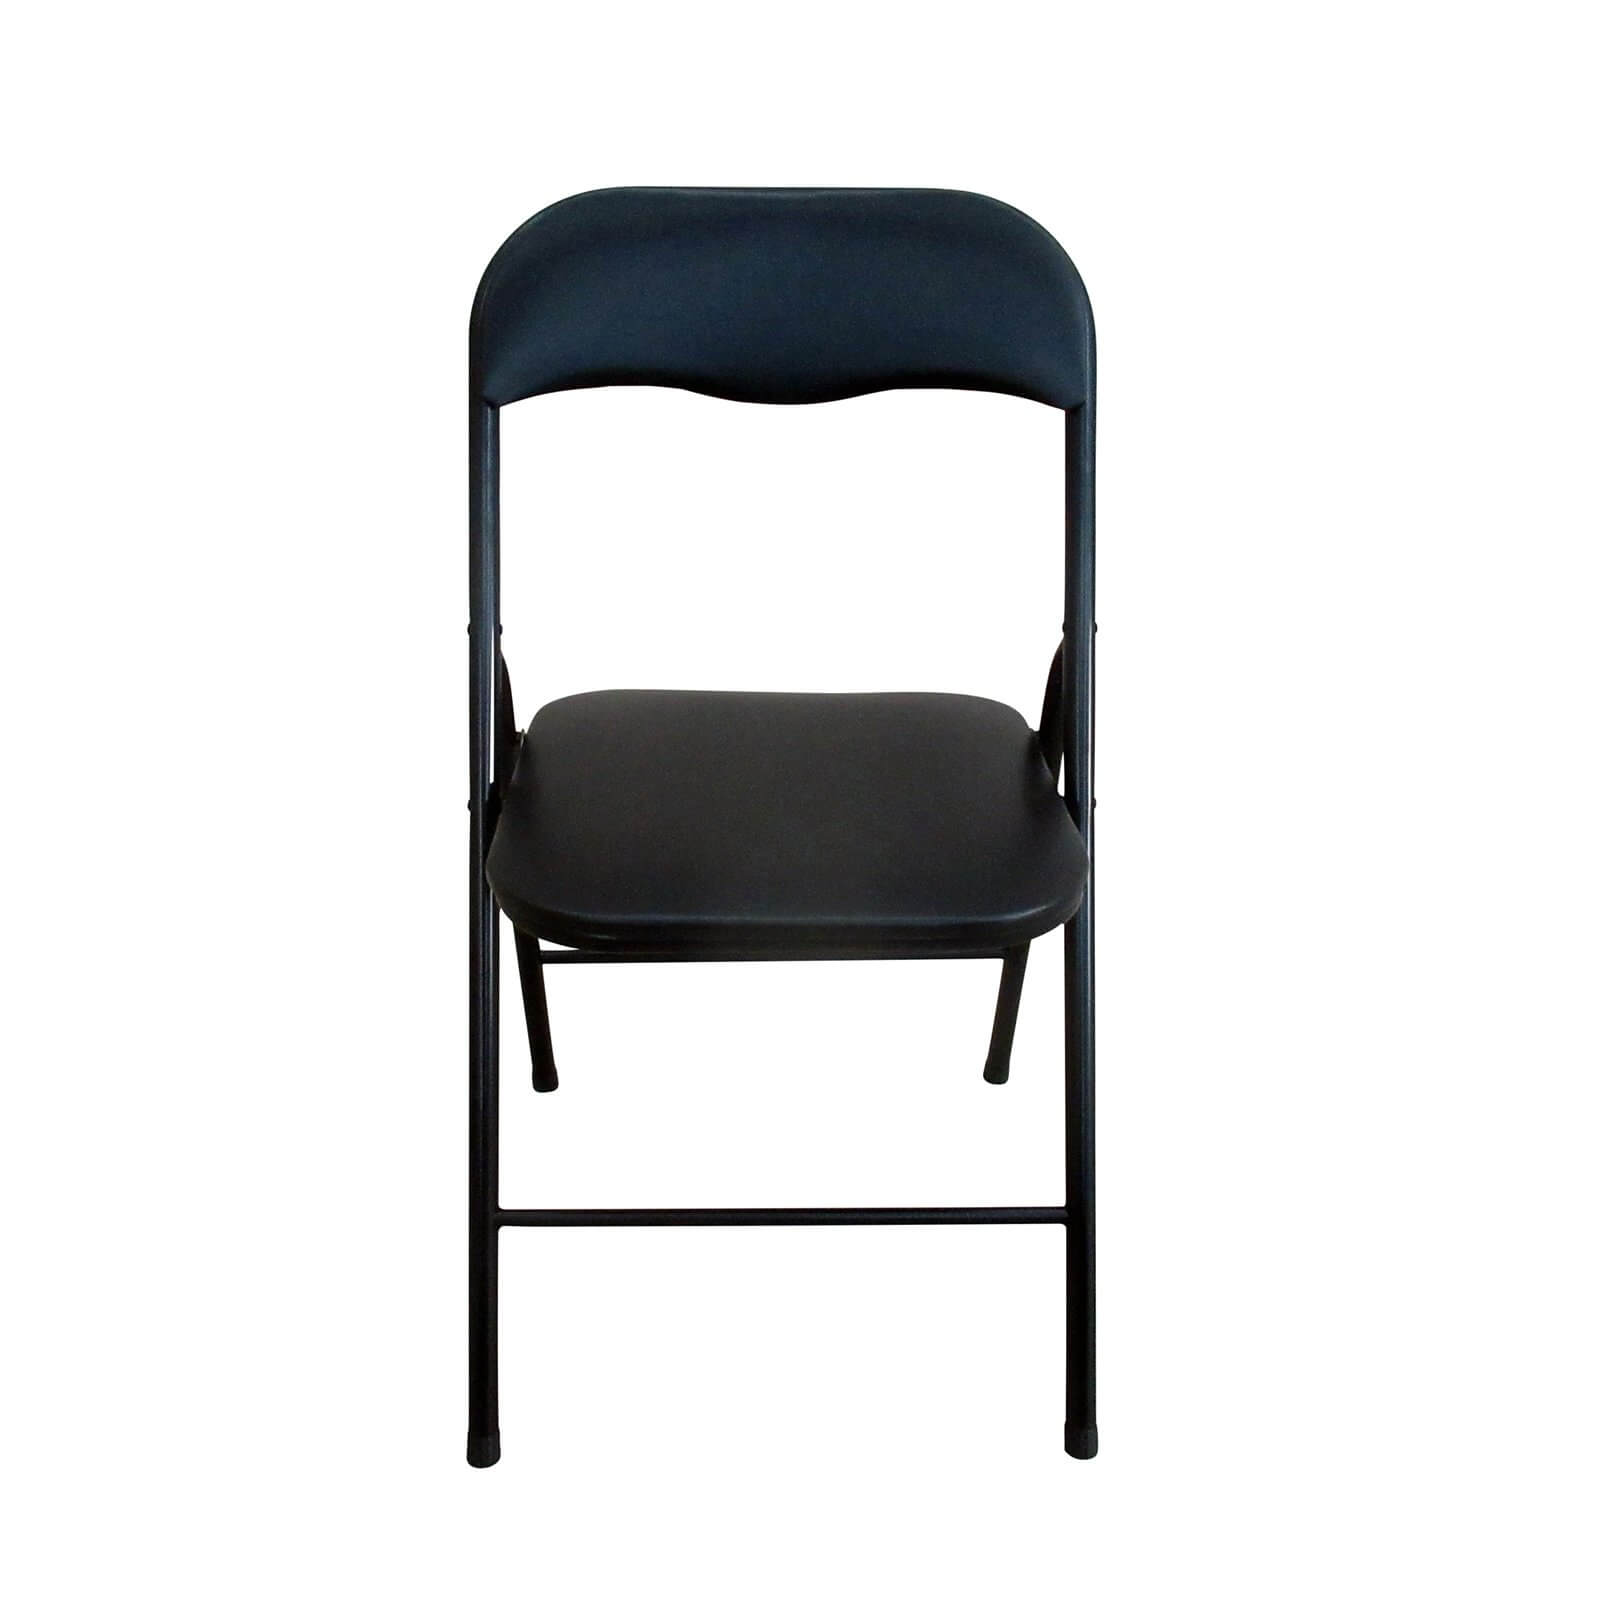 Photo of Folding Metal Padded Chair - Black